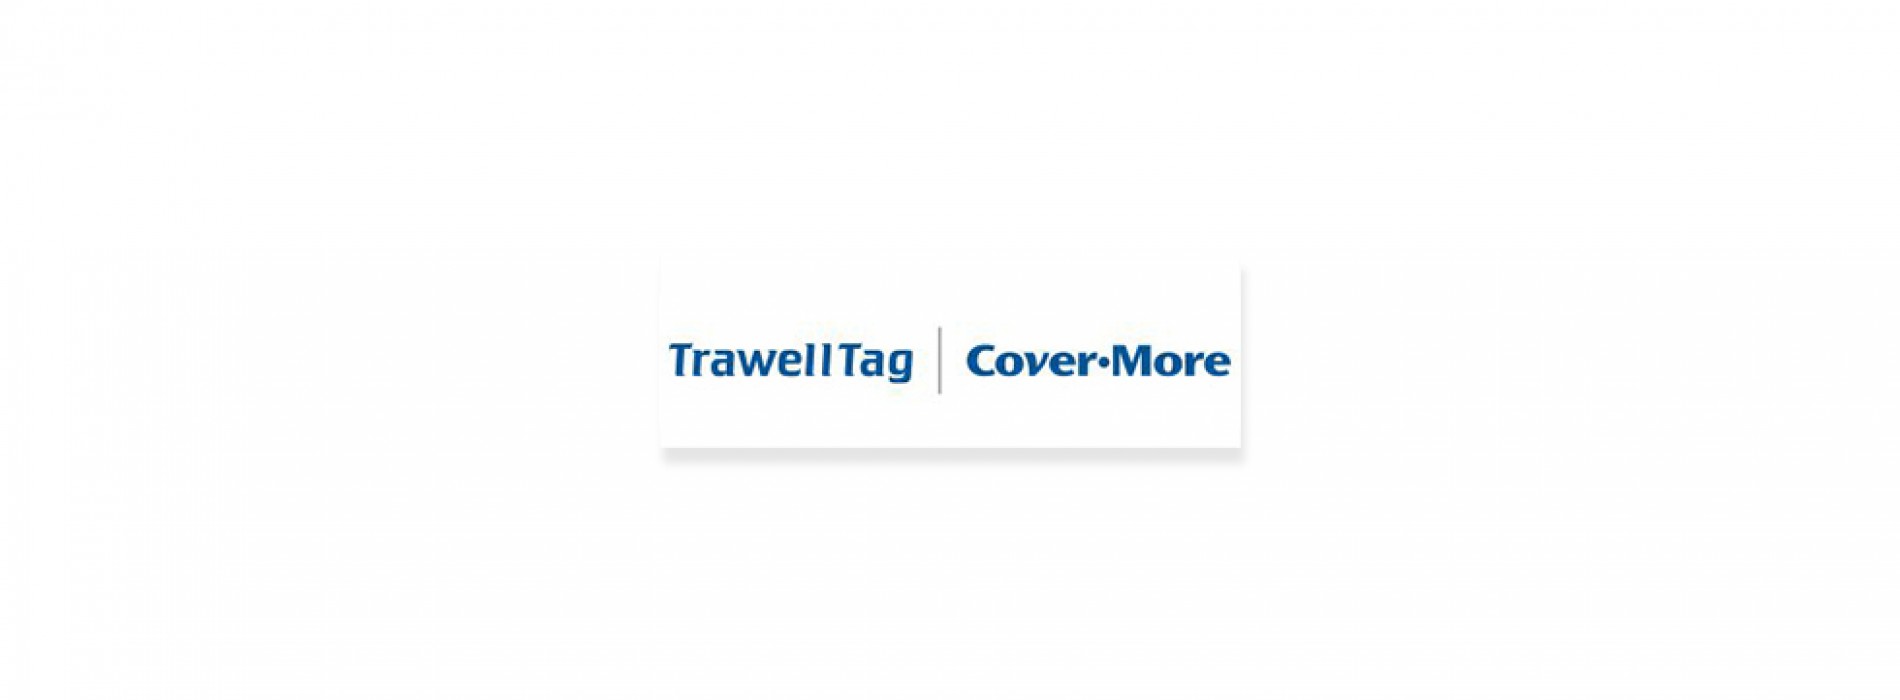 TrawellTag Cover-More announces its association with Yatra.com